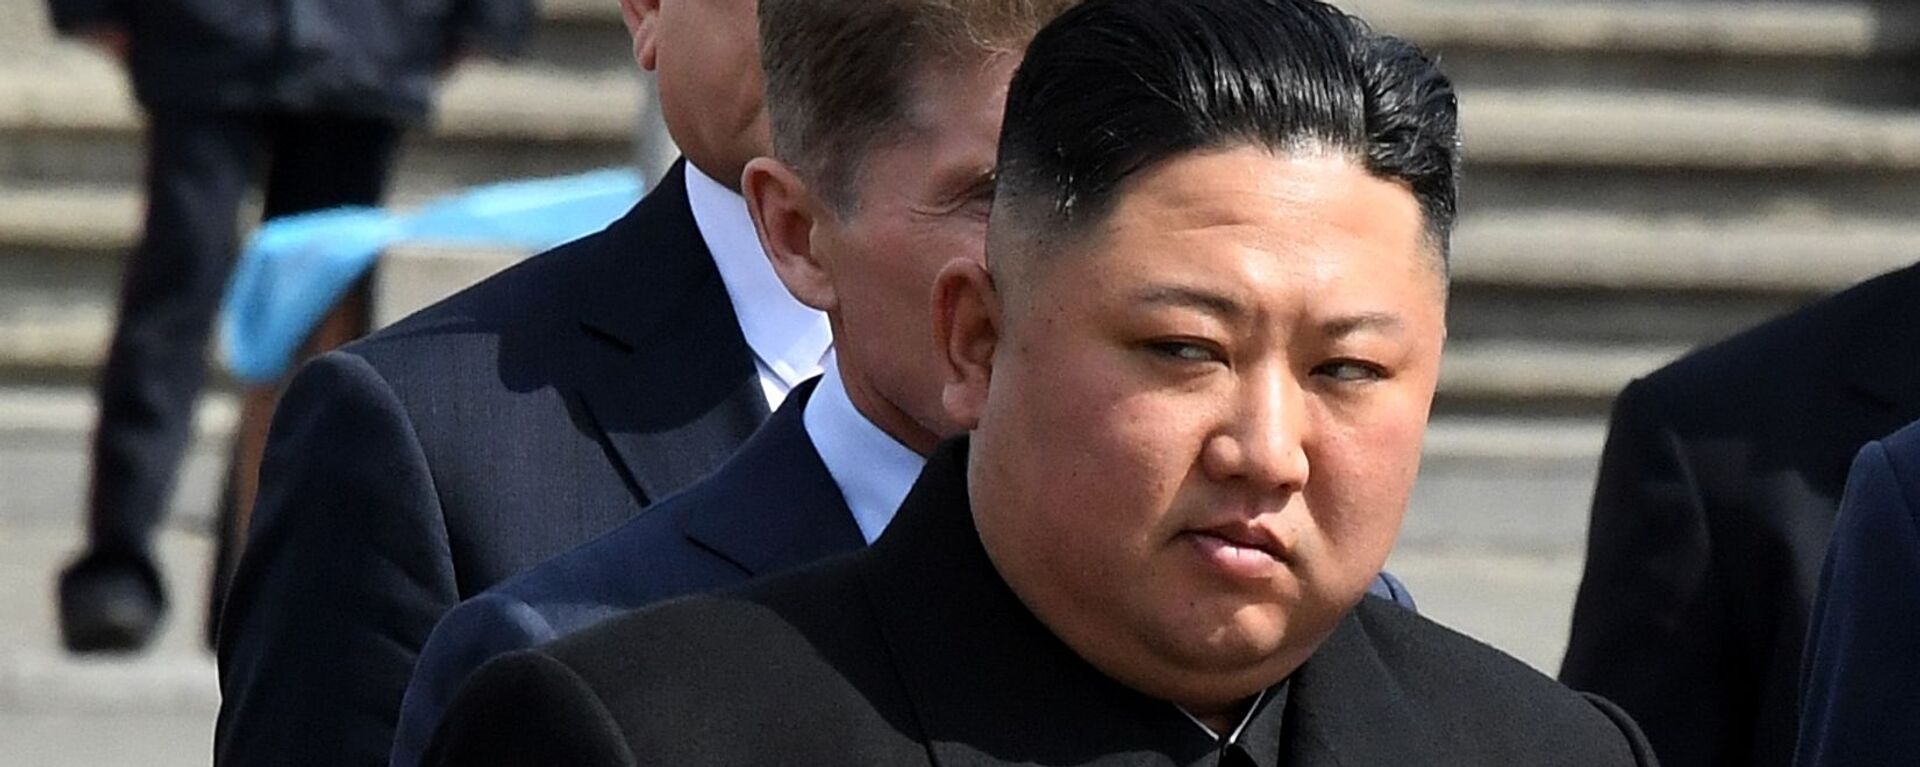 Kim Jong-un, líder de Corea del Norte (archivo) - Sputnik Mundo, 1920, 16.02.2021